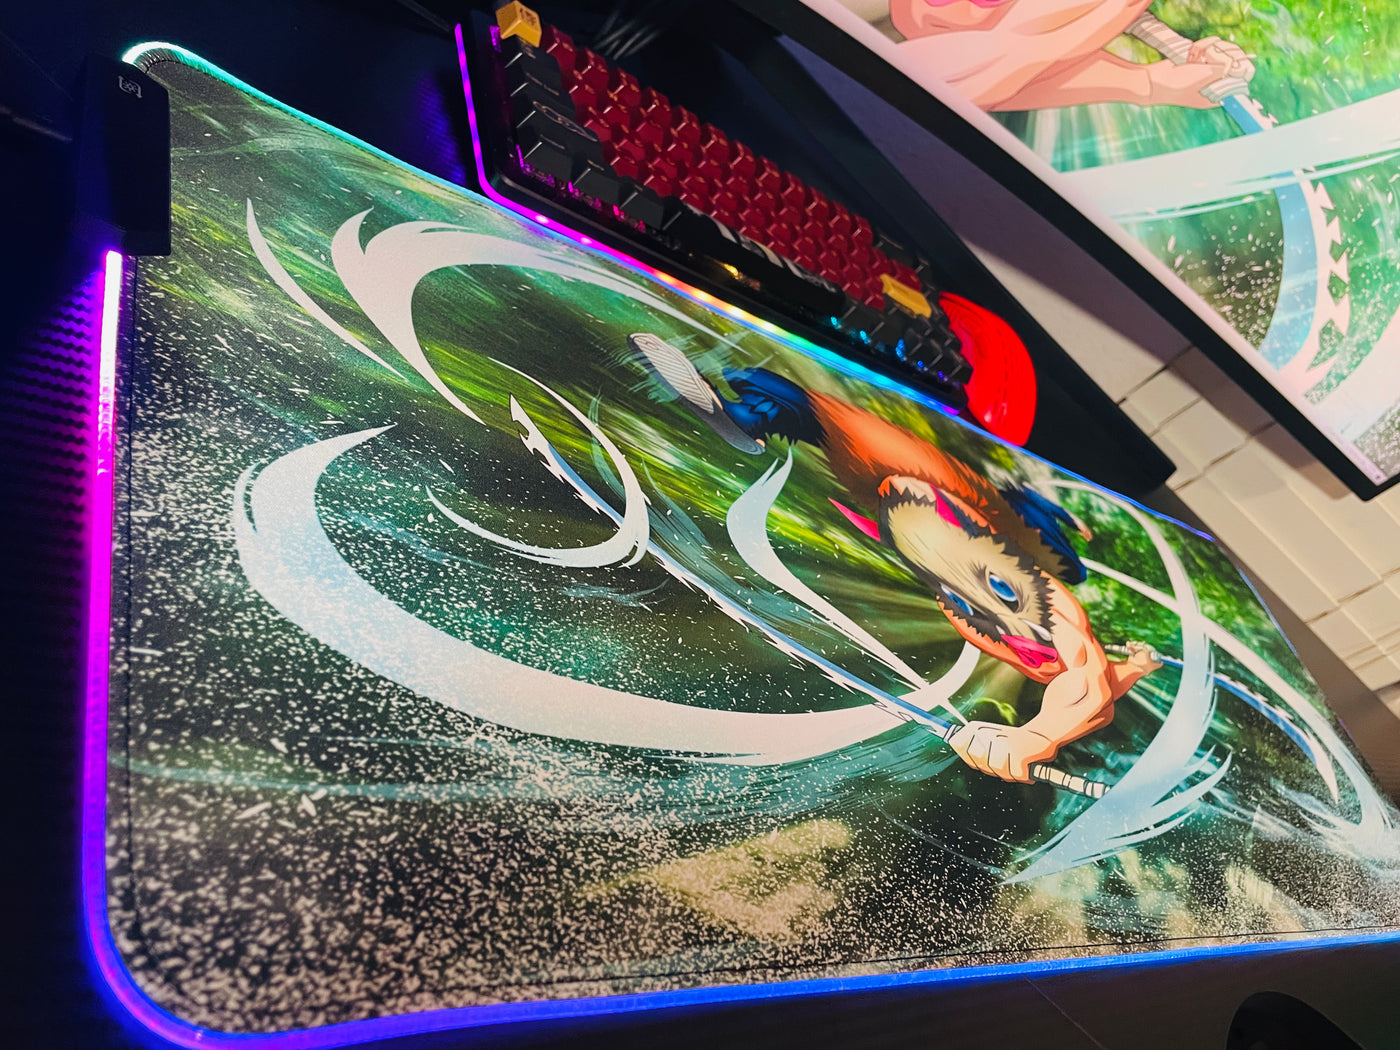 AnimePads - Anime Mouse Pads and Desk Mats